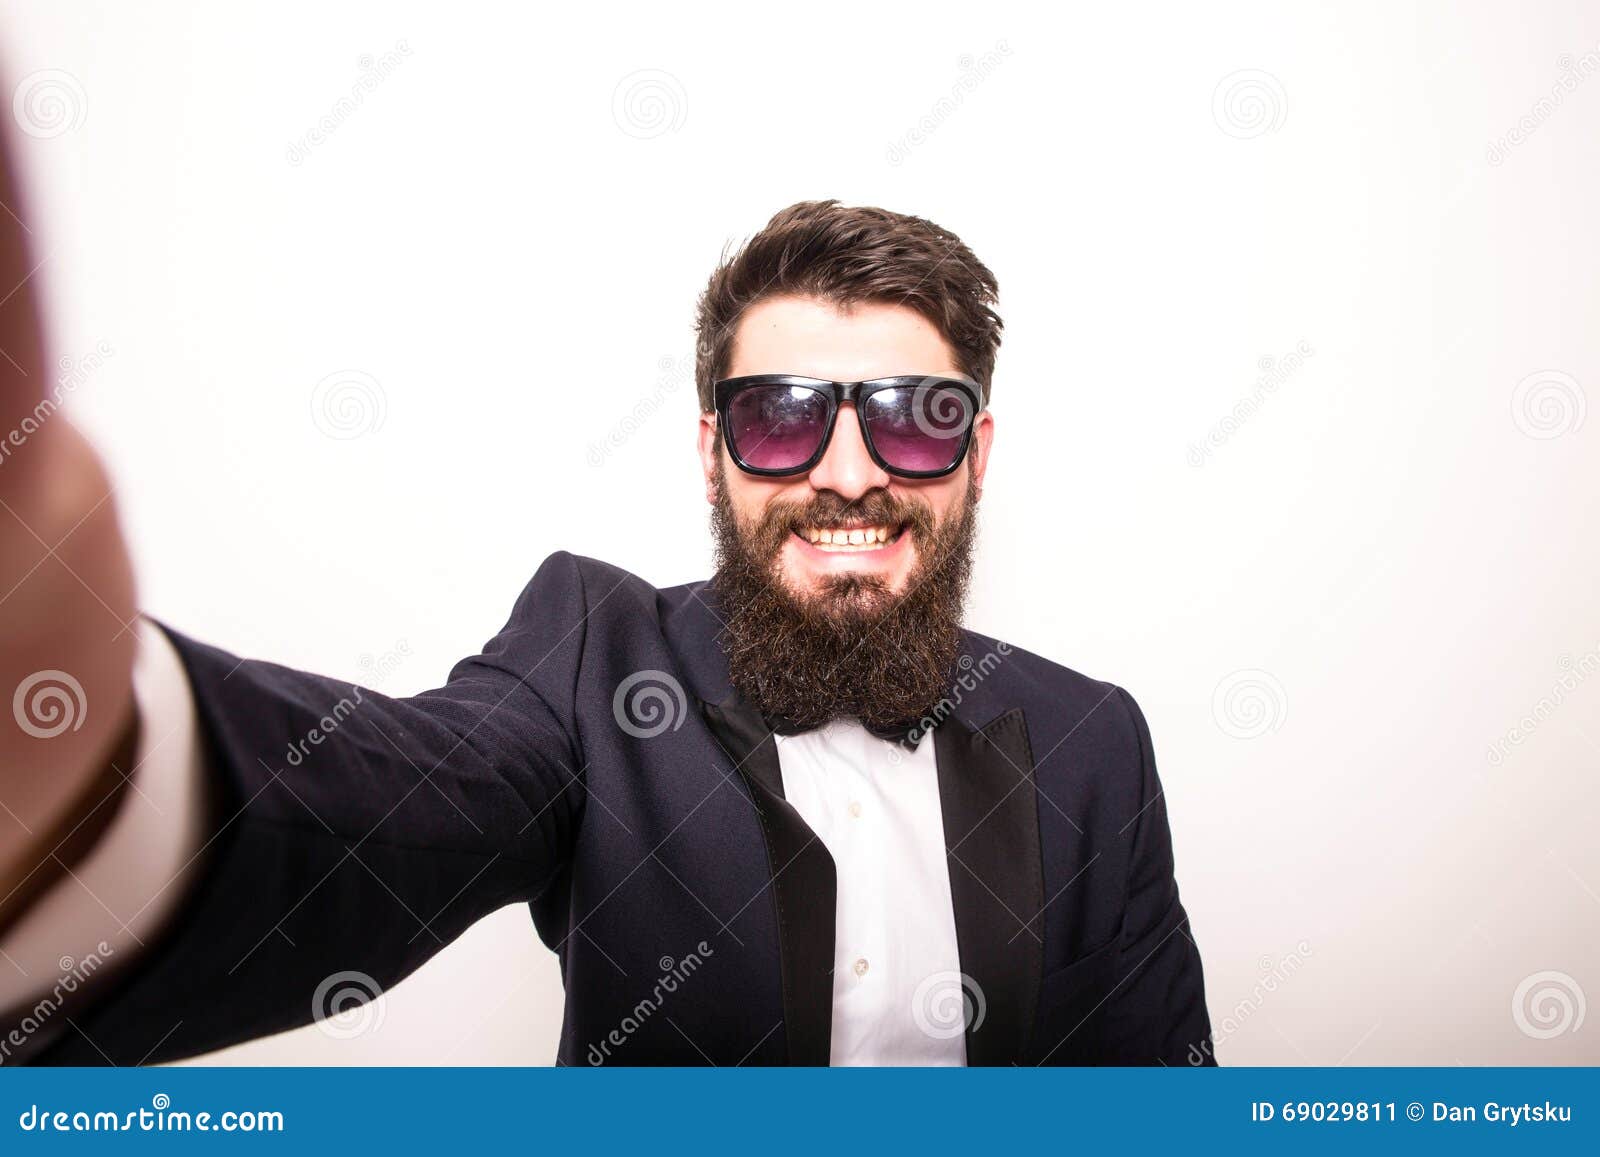 guy selfie beard sunglasses